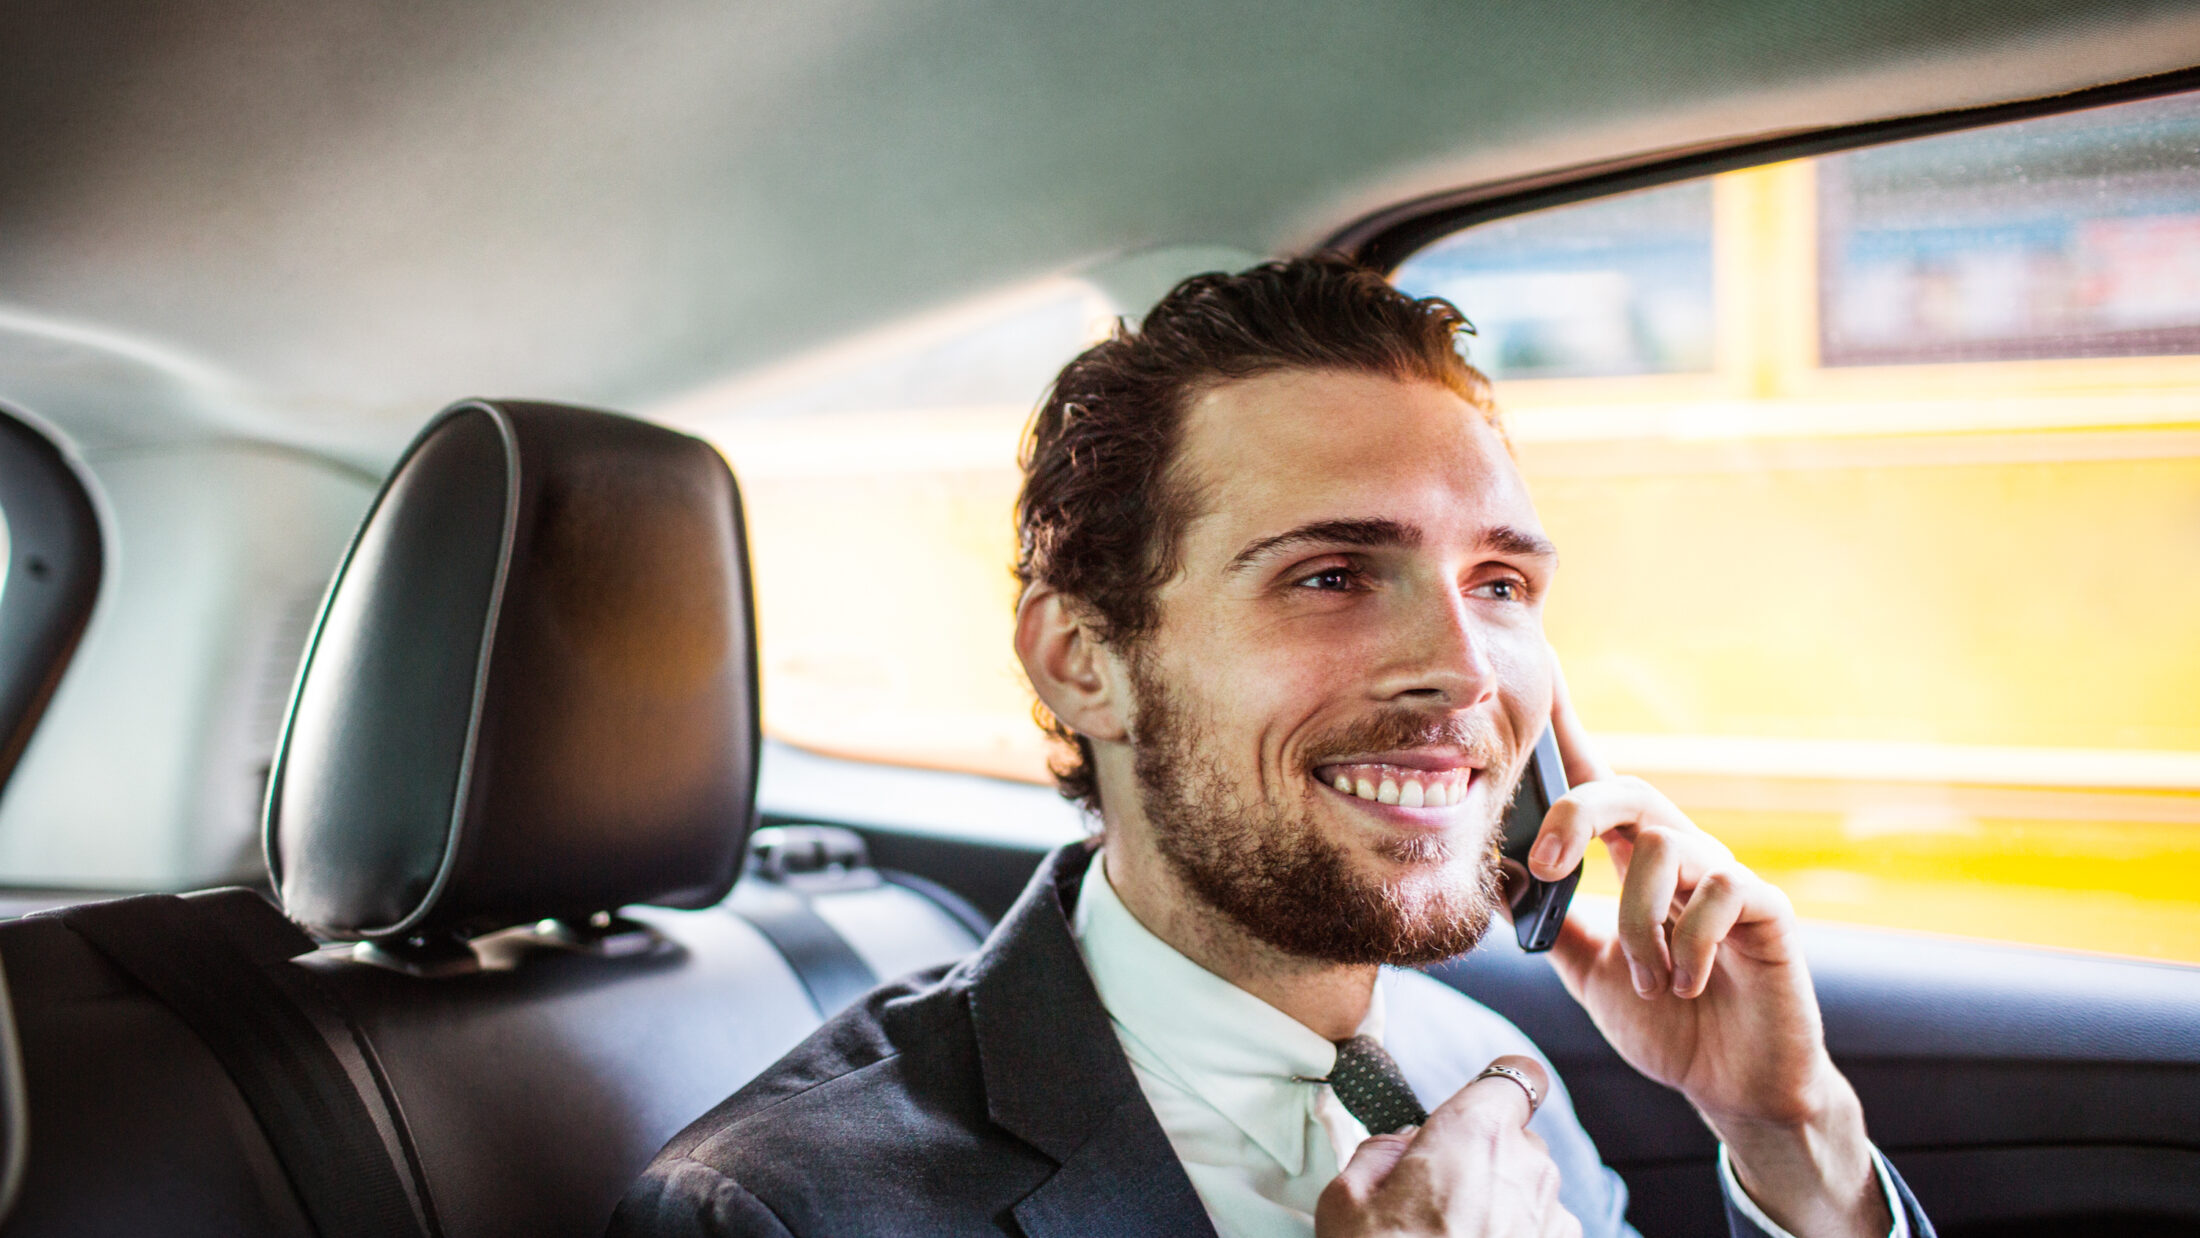 Smiling businessman talking on phone while traveli 2022 03 09 02 30 32 utc